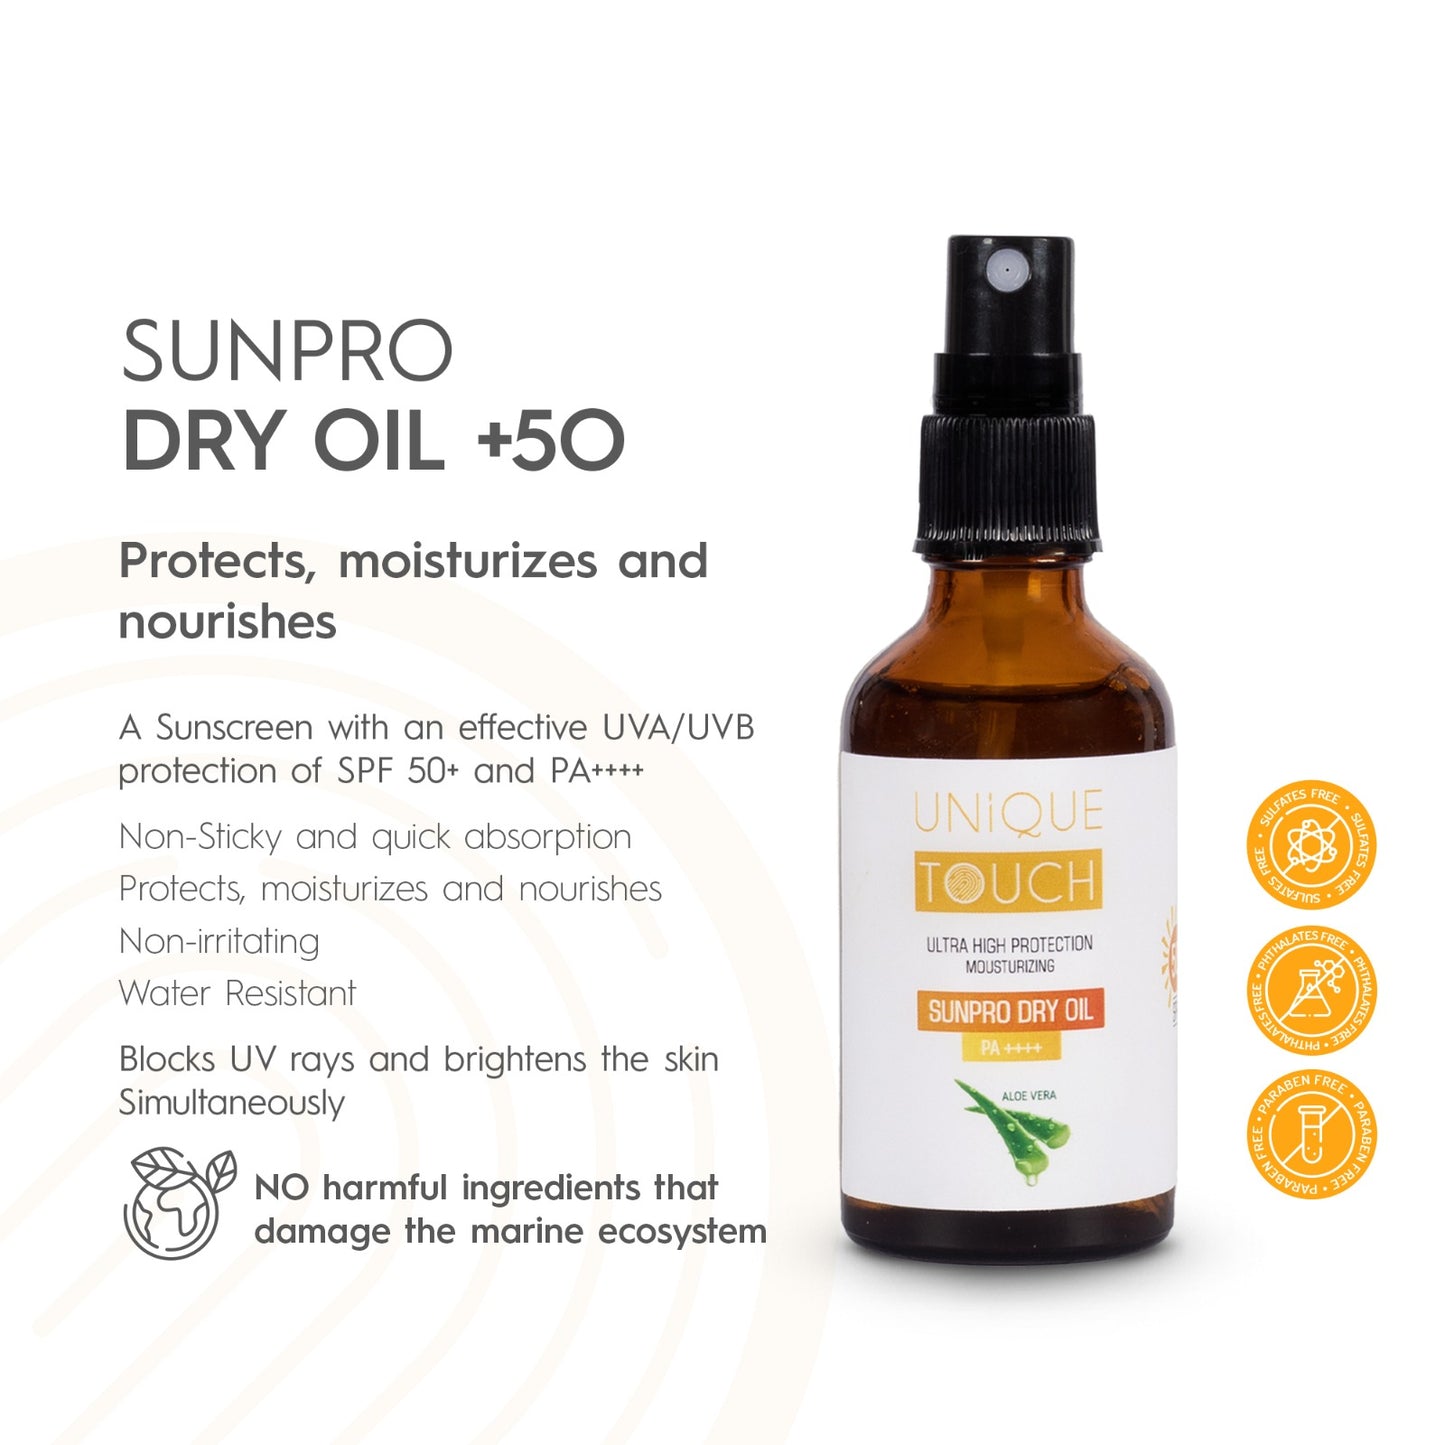 SunPro Dry Oil